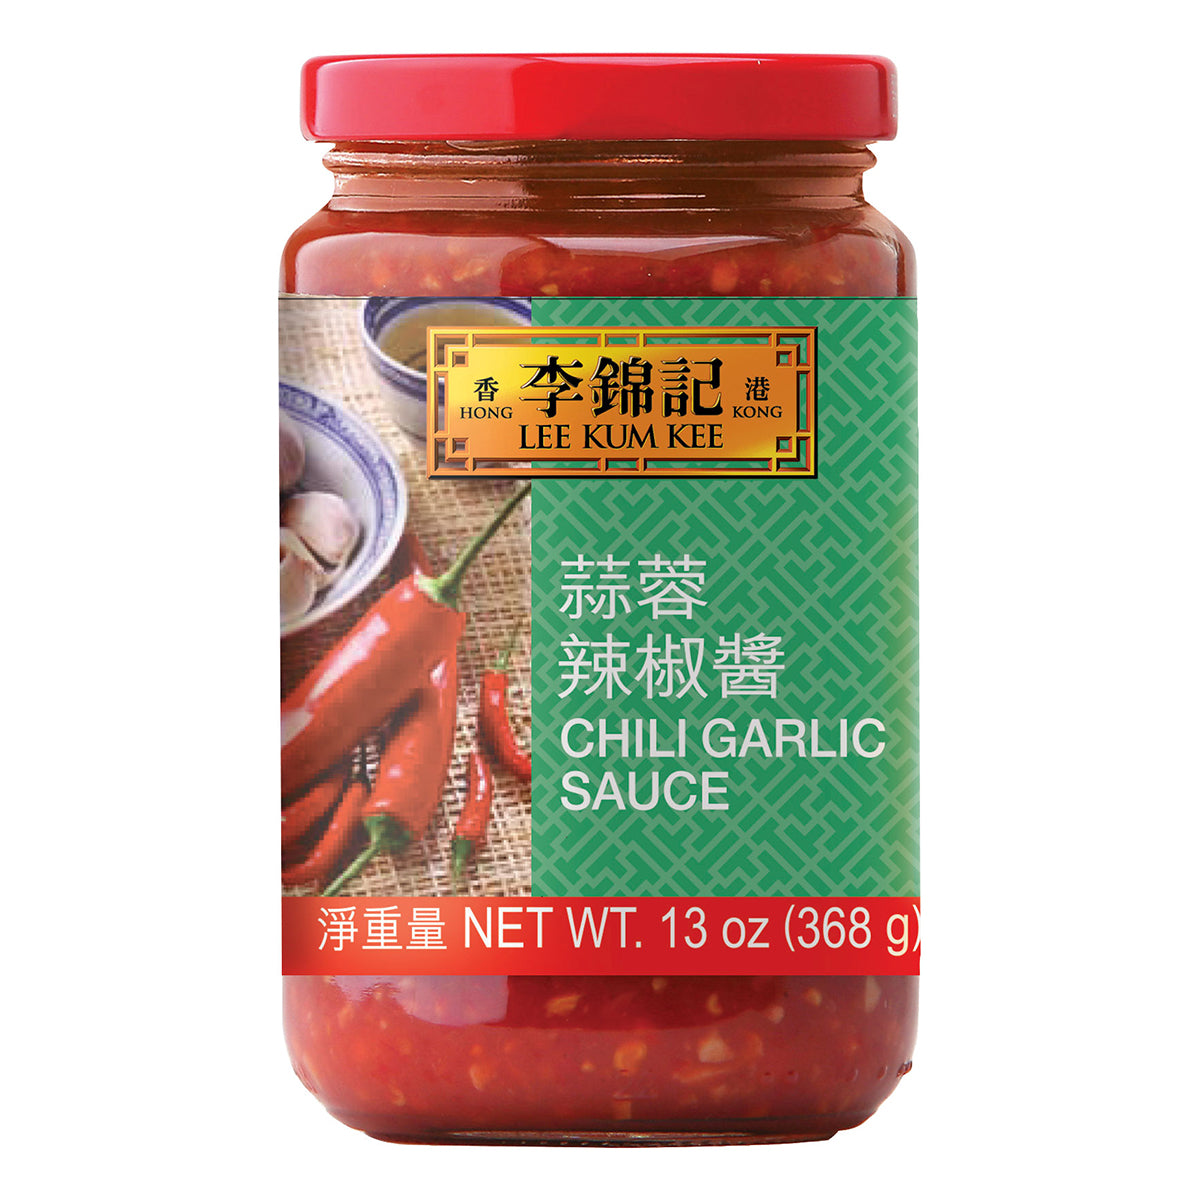 lee kum kee black chili garlic sauce - 13oz